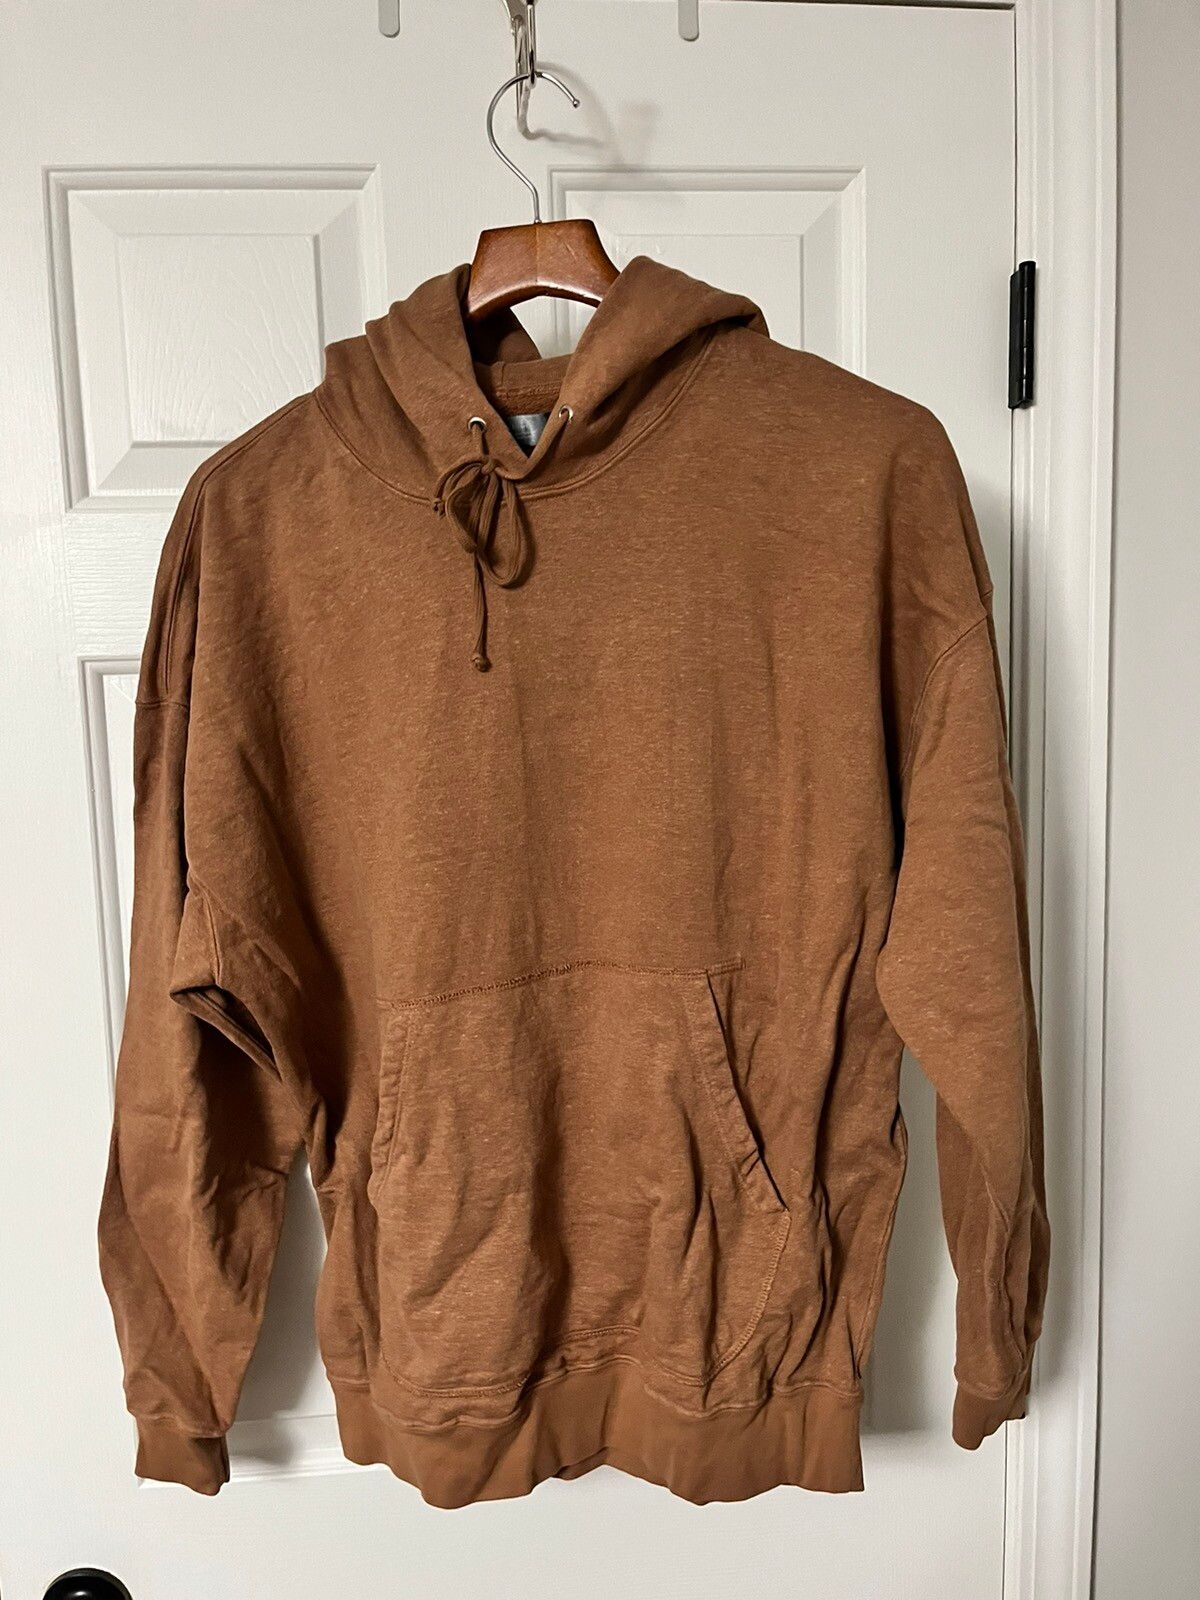 Evan Kinori Hooded Sweatshirt - Hemp/Organic Cotton Fleece Size US M / EU 48-50 / 2 - 1 Preview